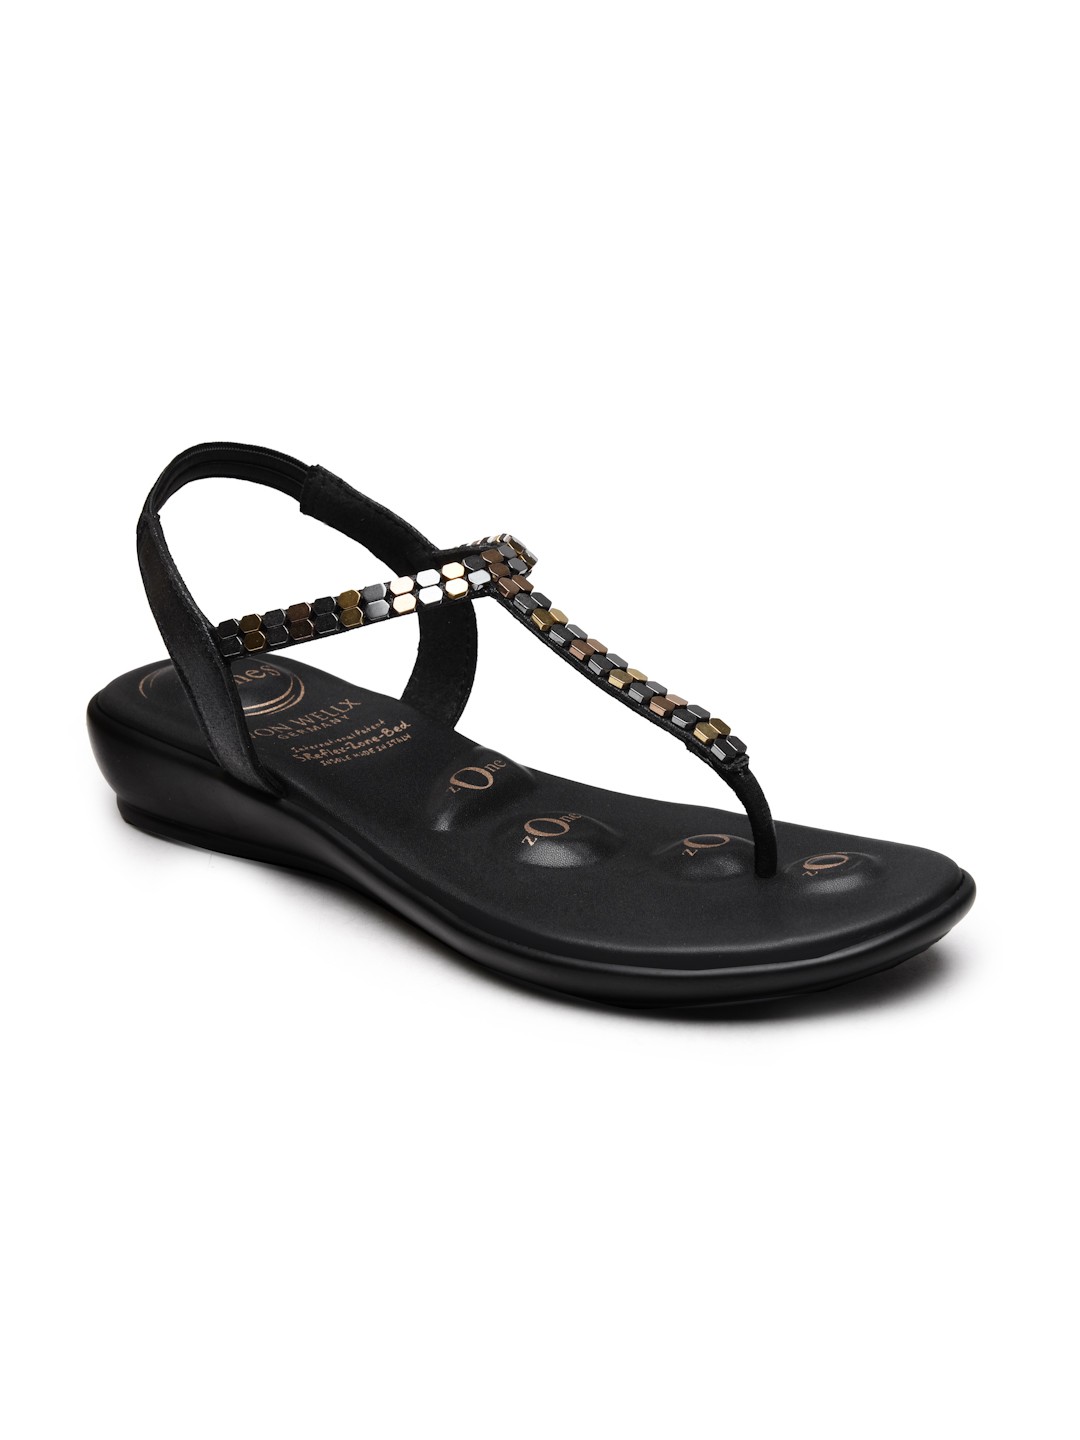 Buy Von Wellx Germany Comfort Women's Black Casual Sandals Regina Online in Kuwait City